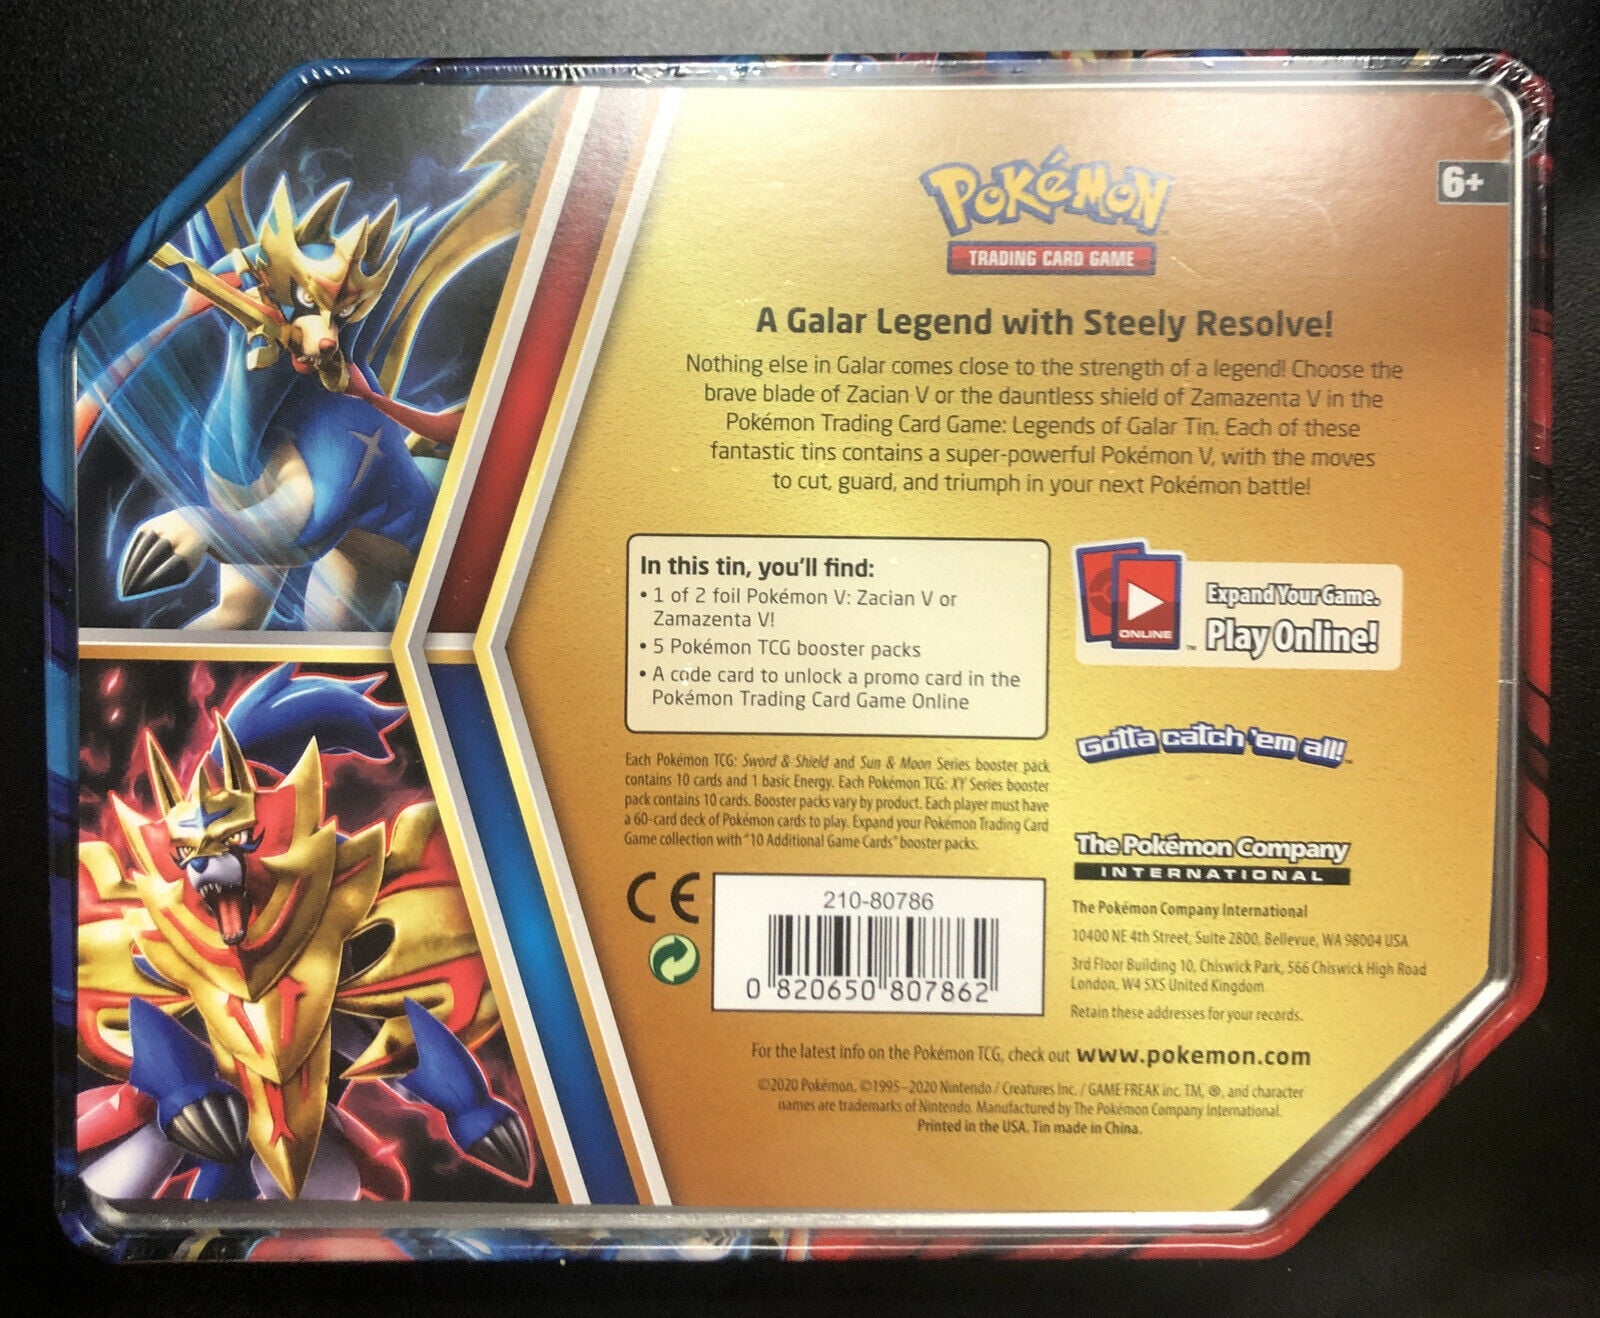 Pokémon Legends of Galar Trading Card Game 210-80710 for sale online 